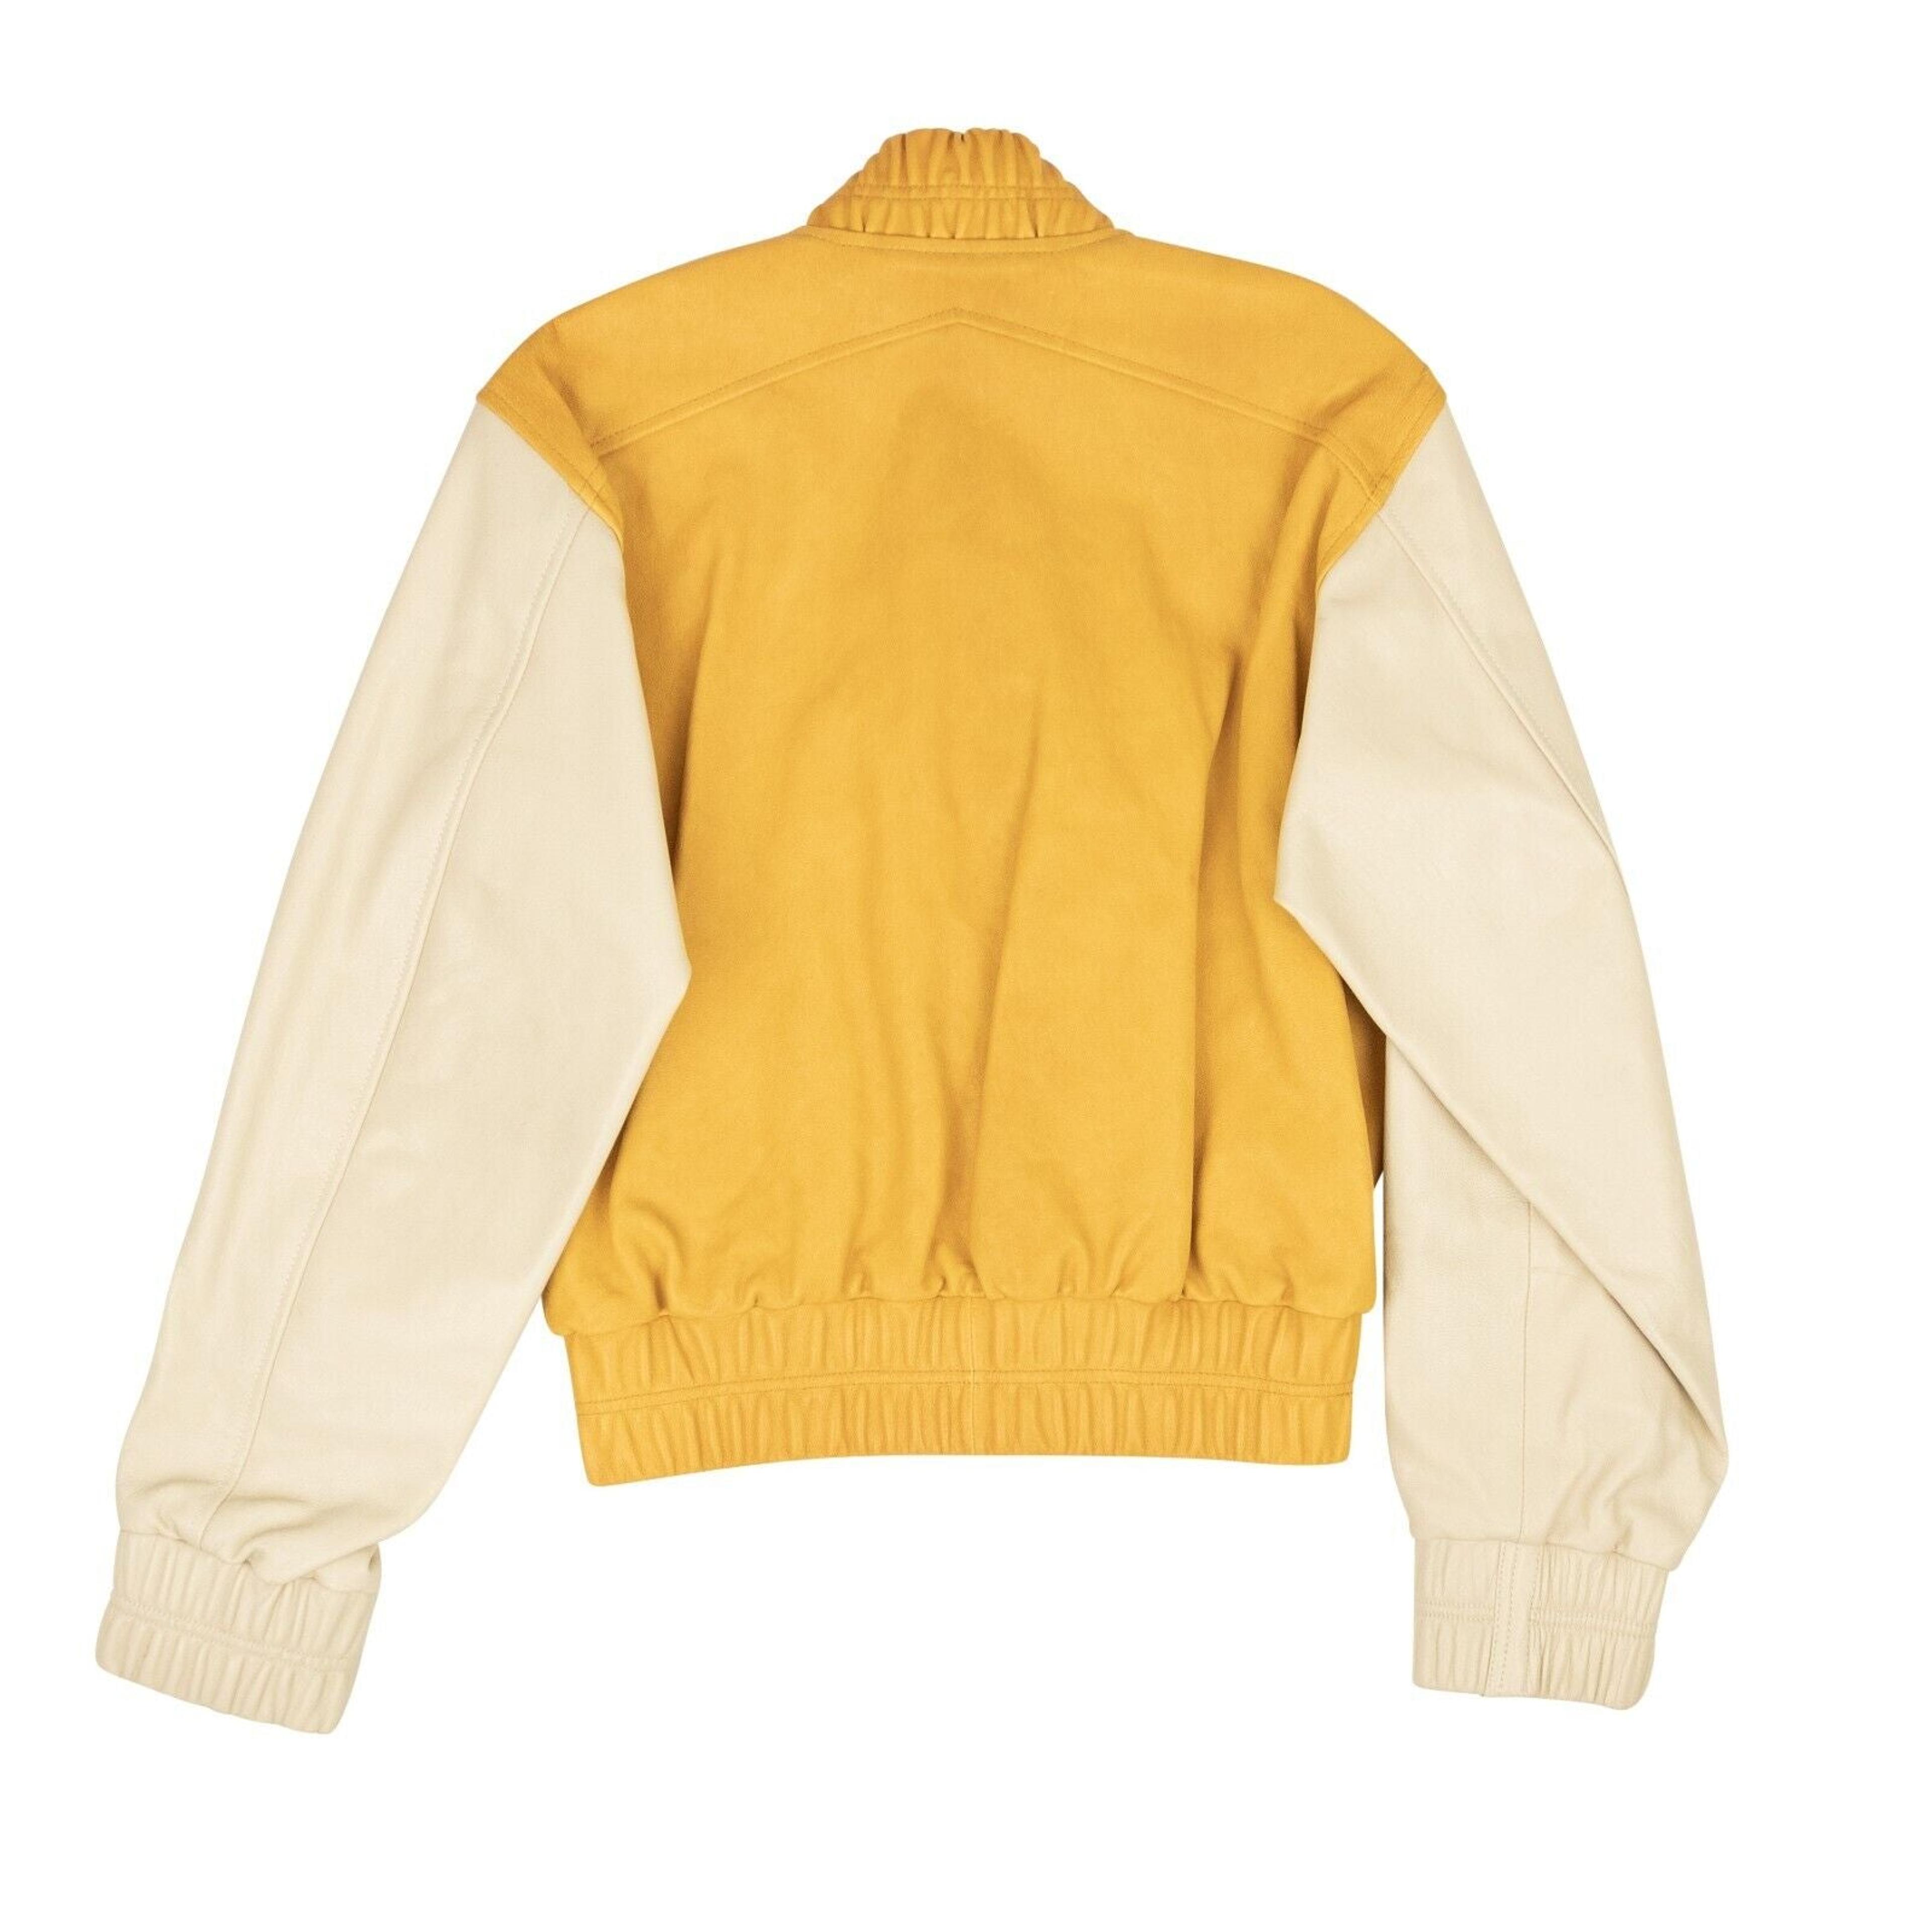 Alternate View 2 of Yellow And Creme Varsity Jacket